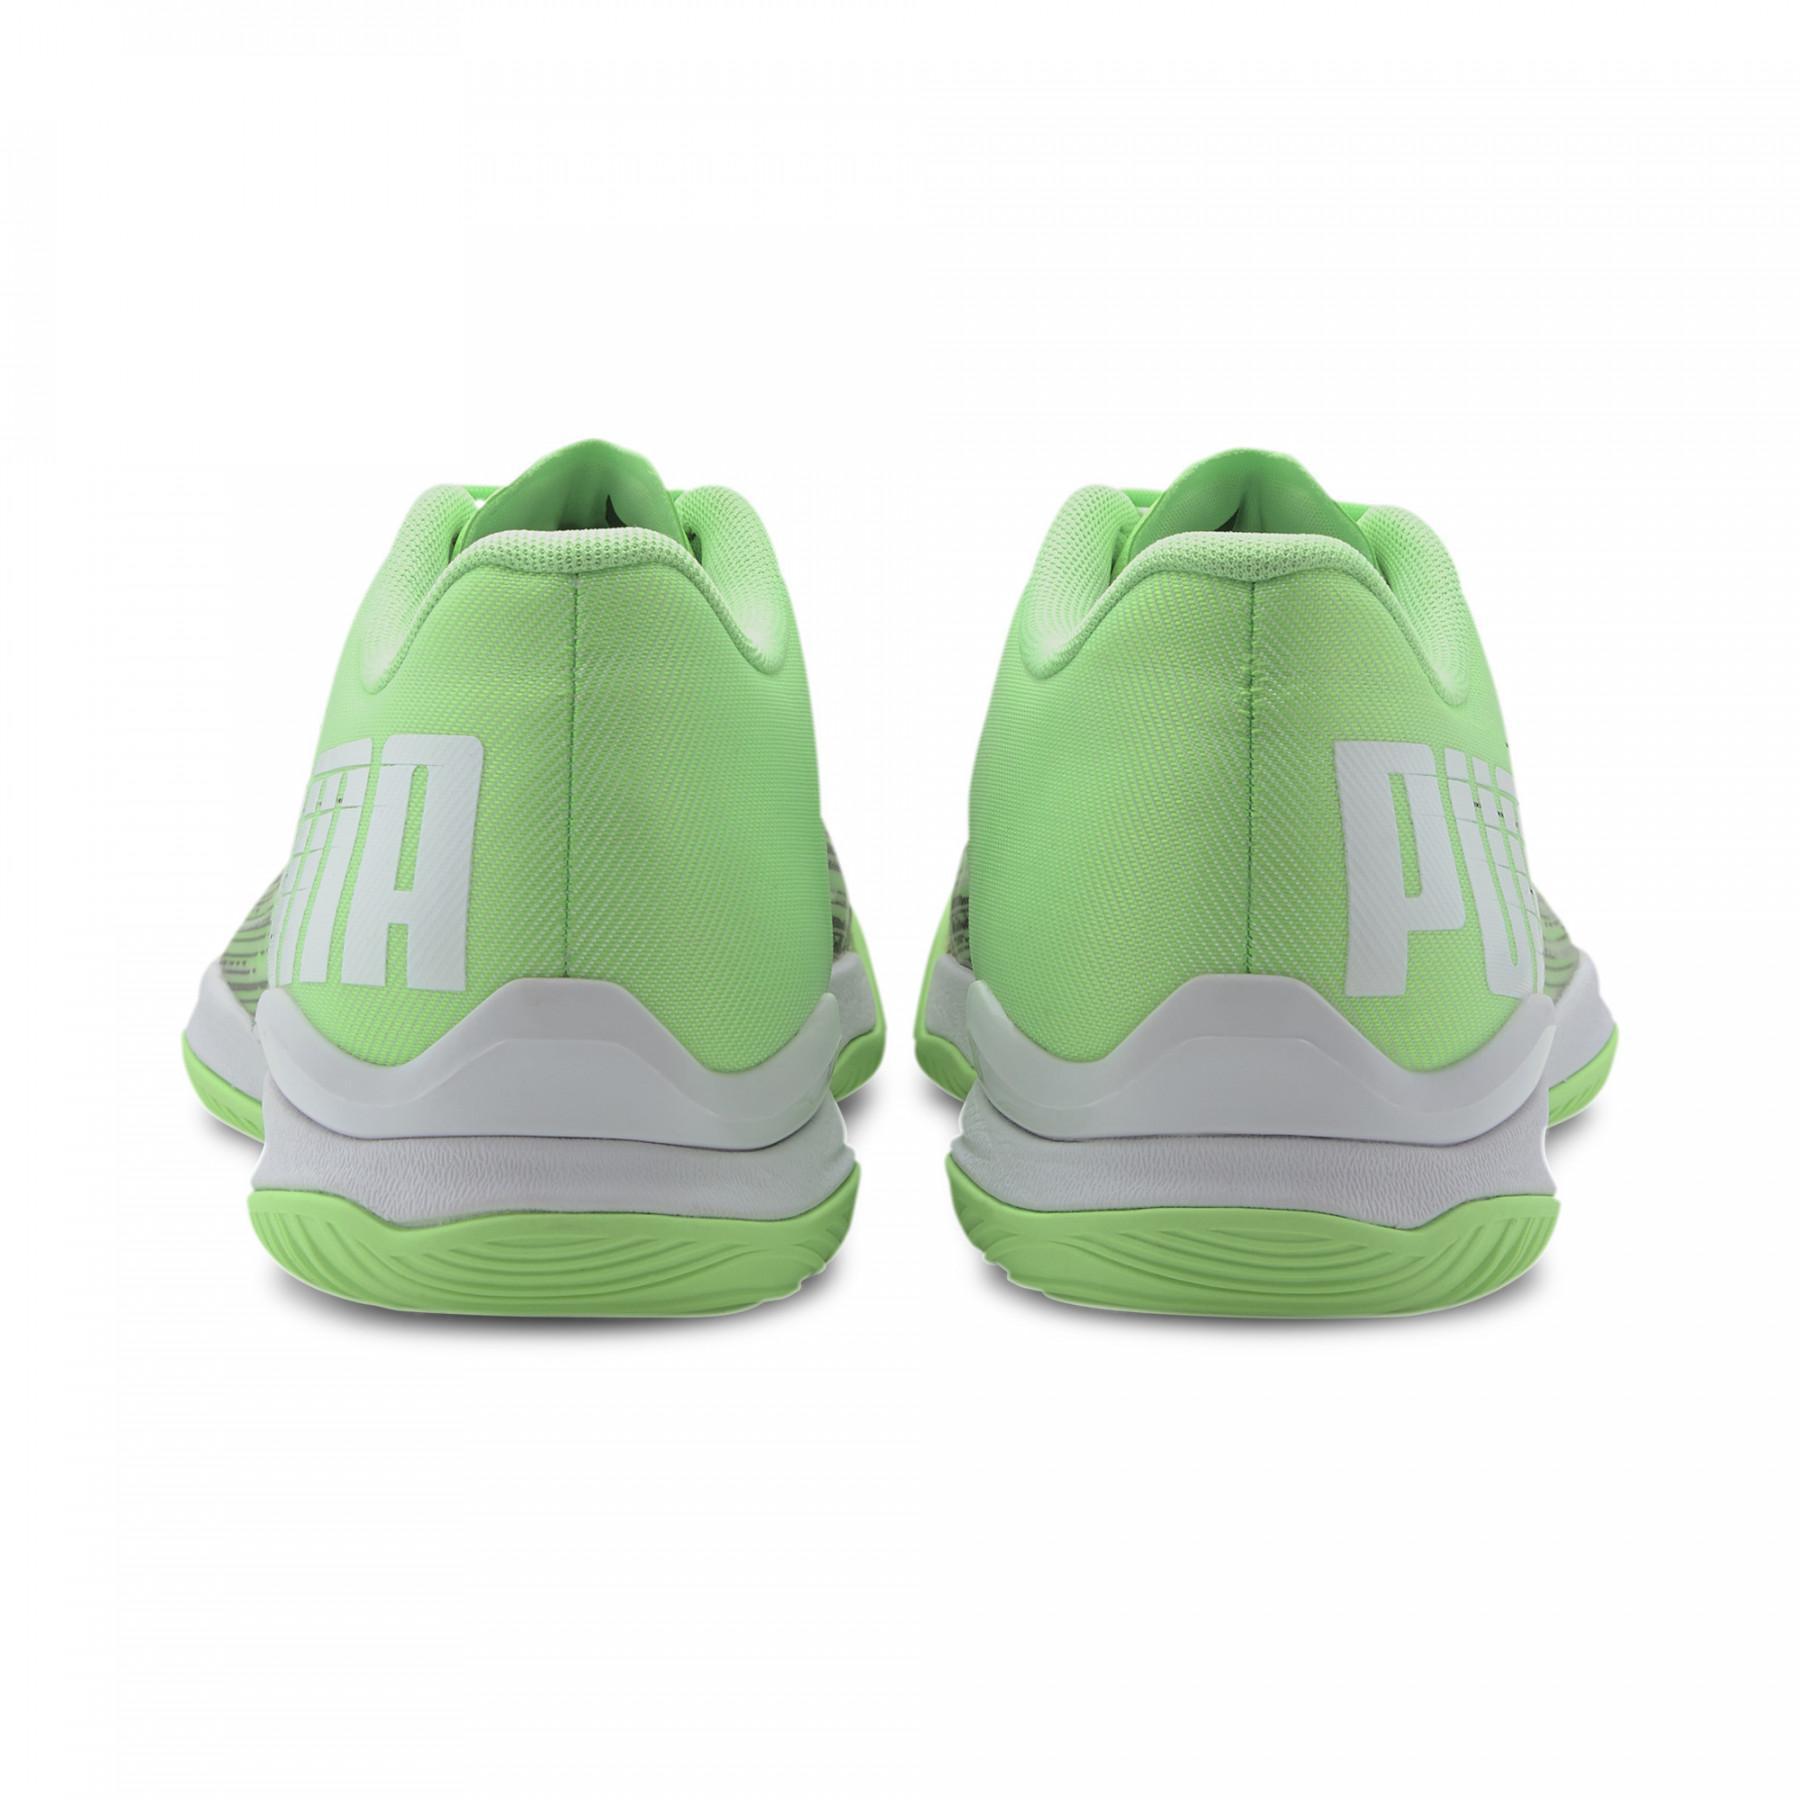 Schoenen Puma Adrenalite 2.1